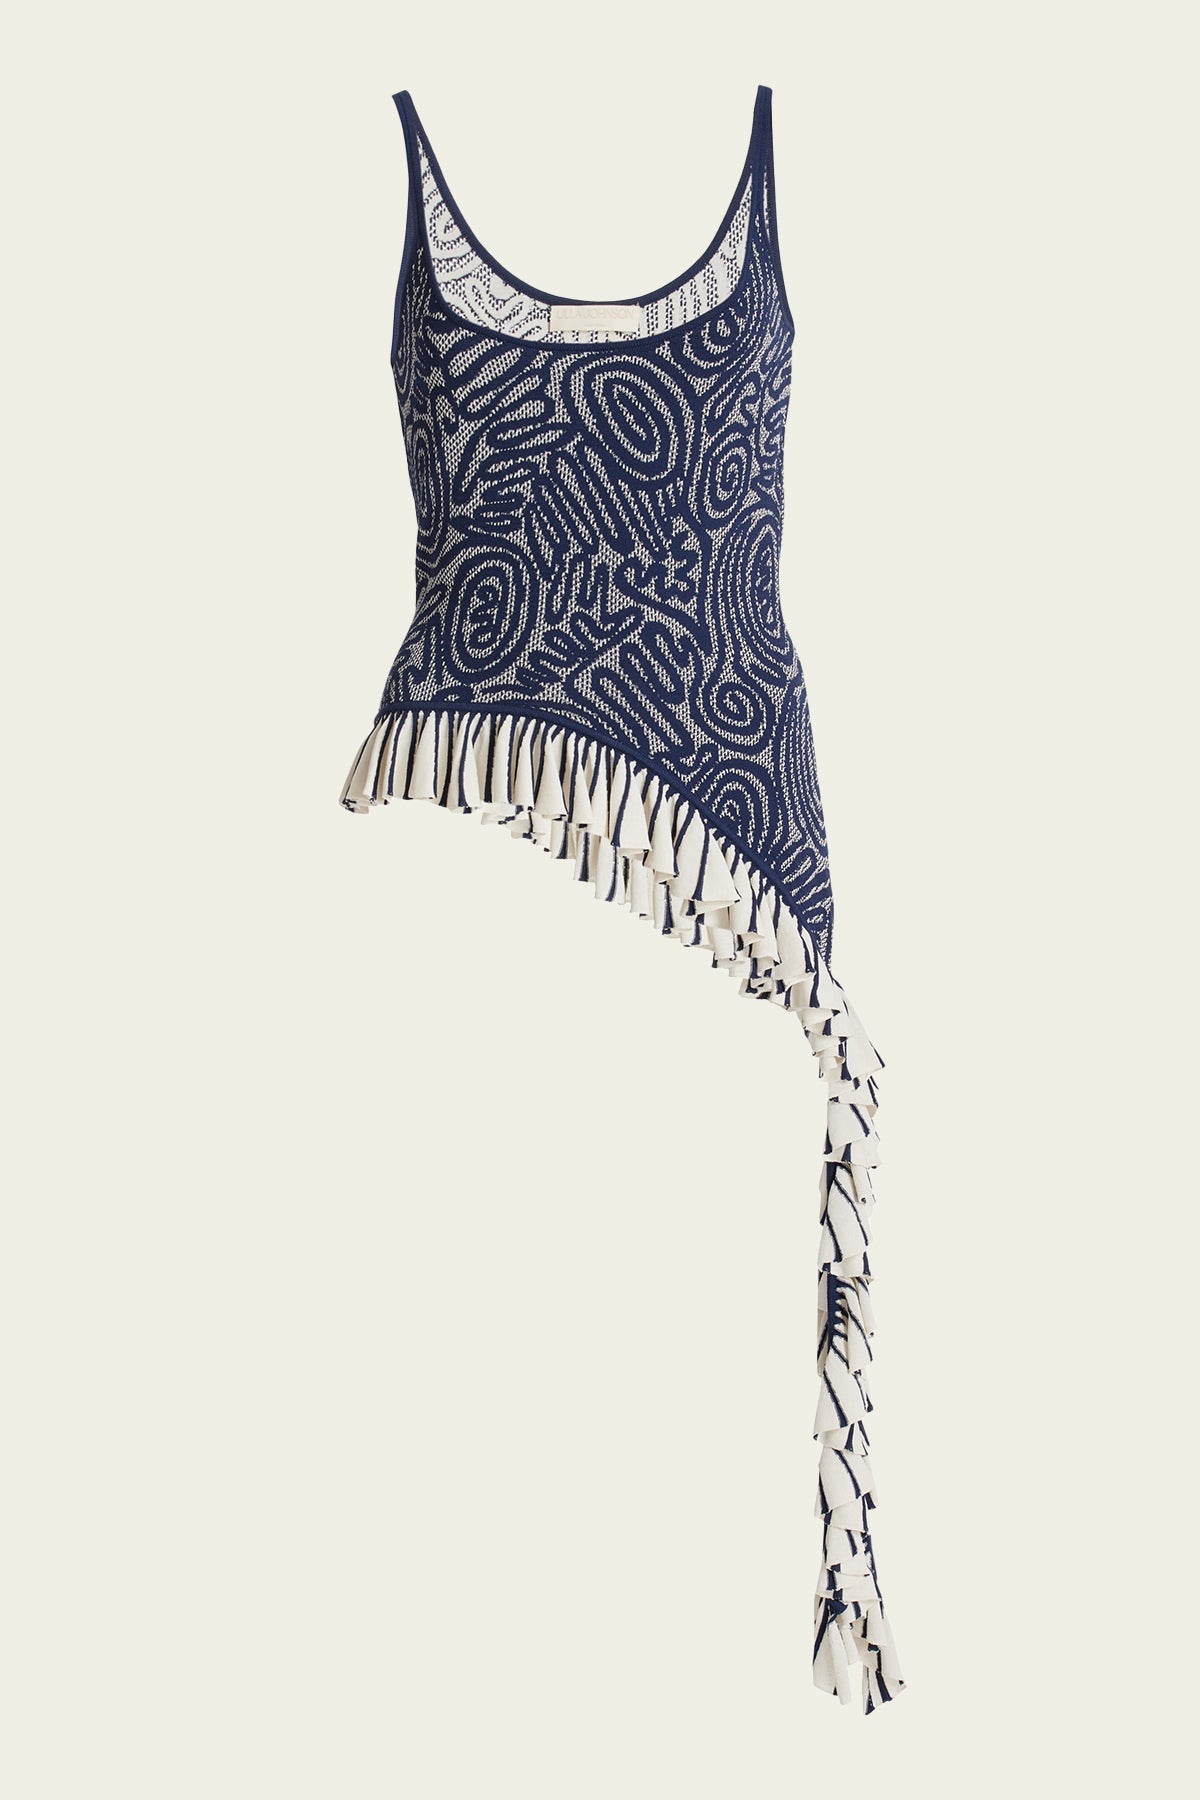 Kendra Ruffled Knit Top in Ink - shop-olivia.com